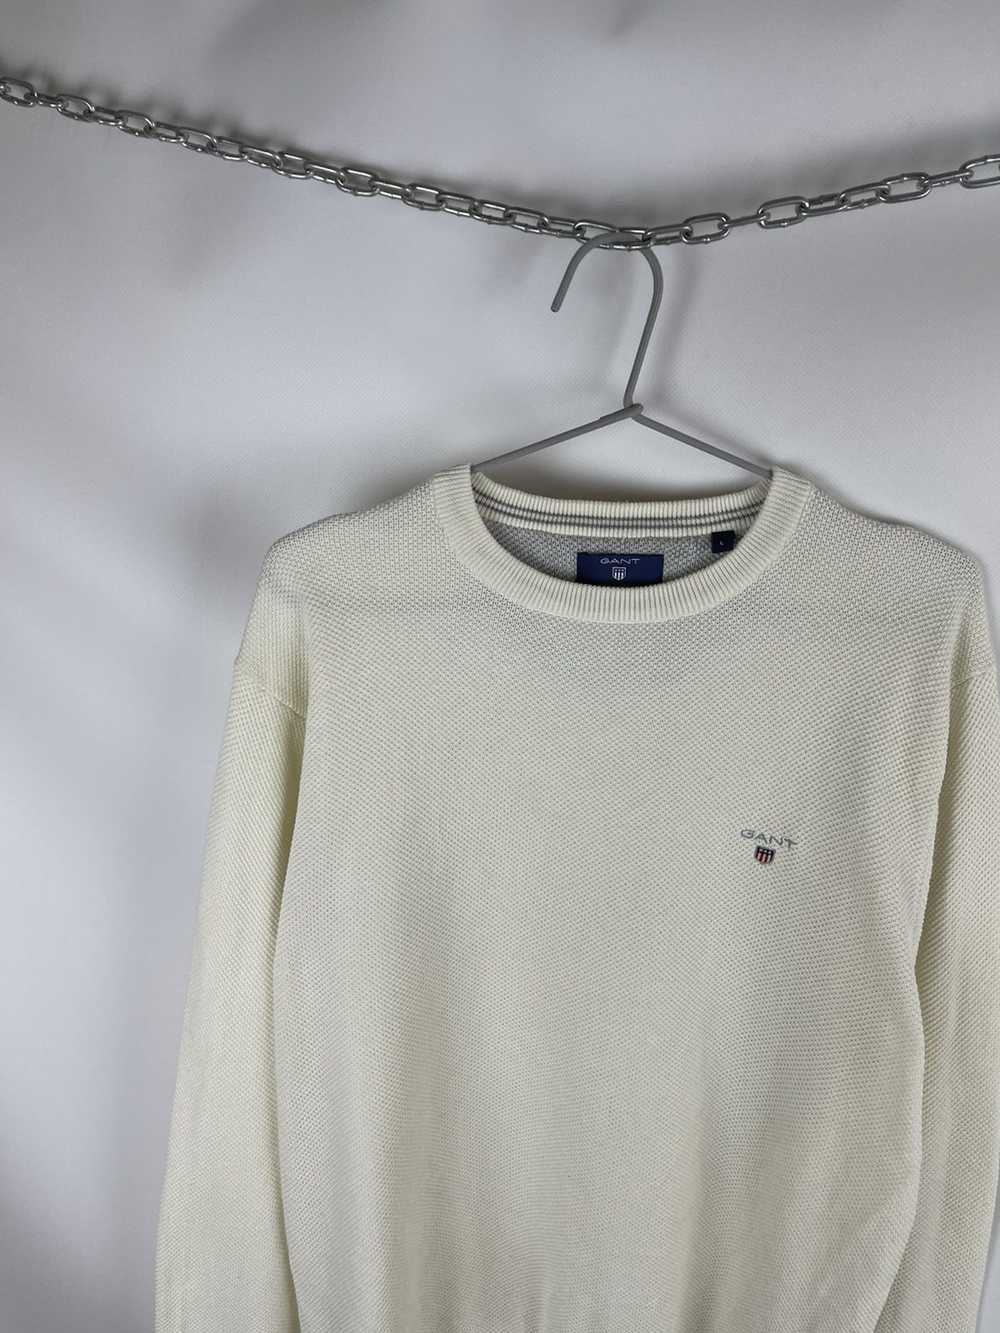 Gant Gant Premium Cotton knitted light sweater - image 3